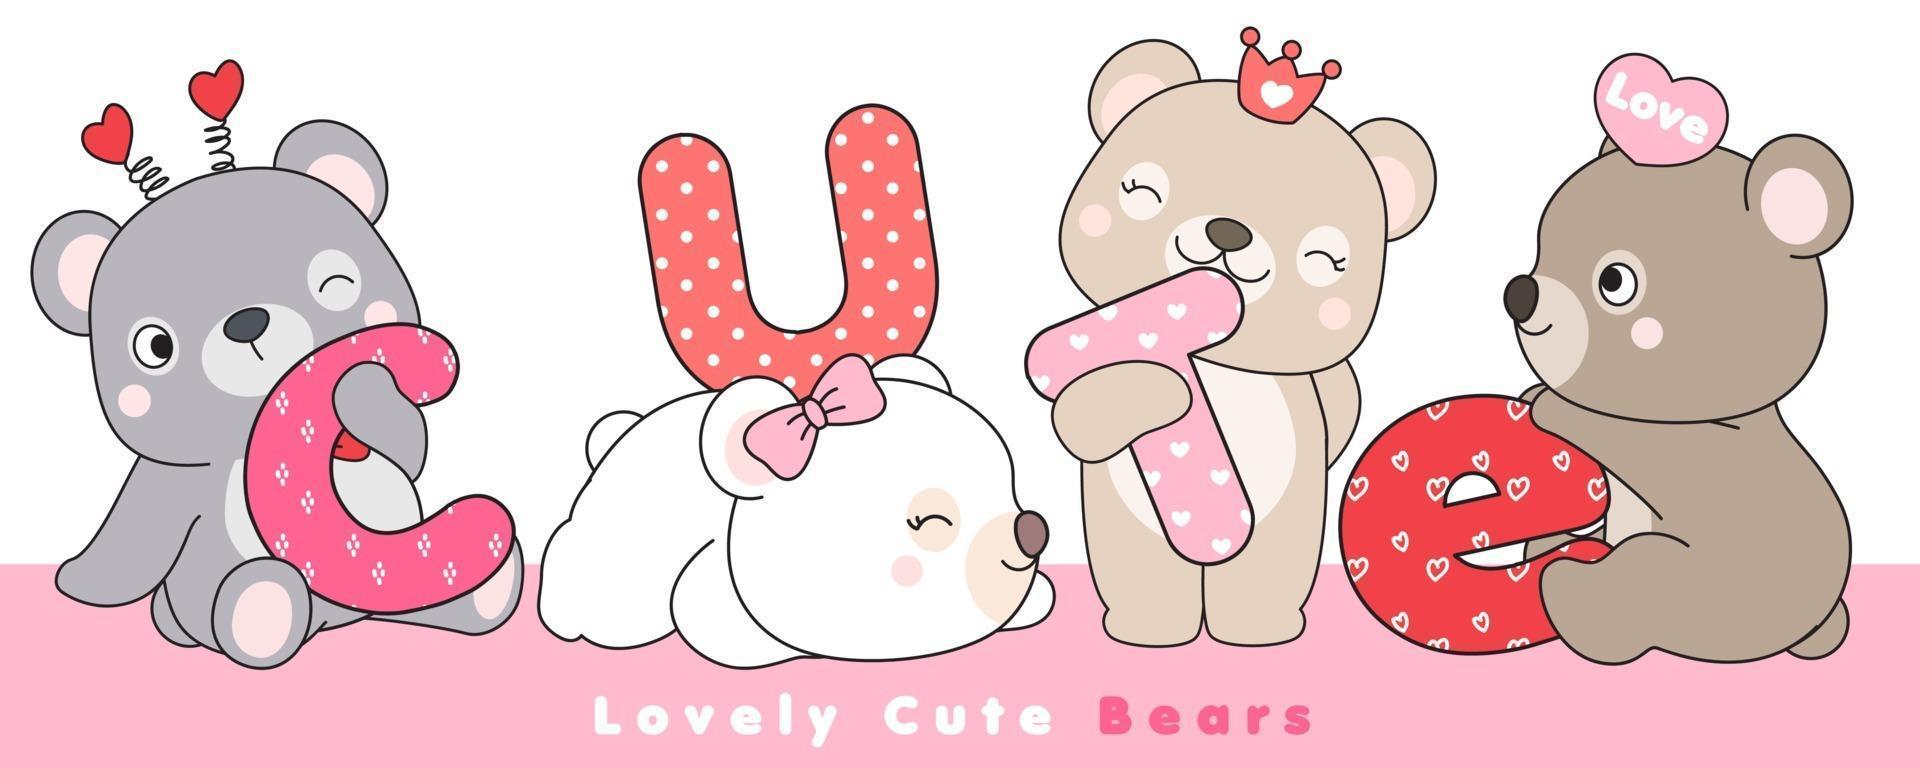 Cute doodle bears with cute alphabet illustration vector